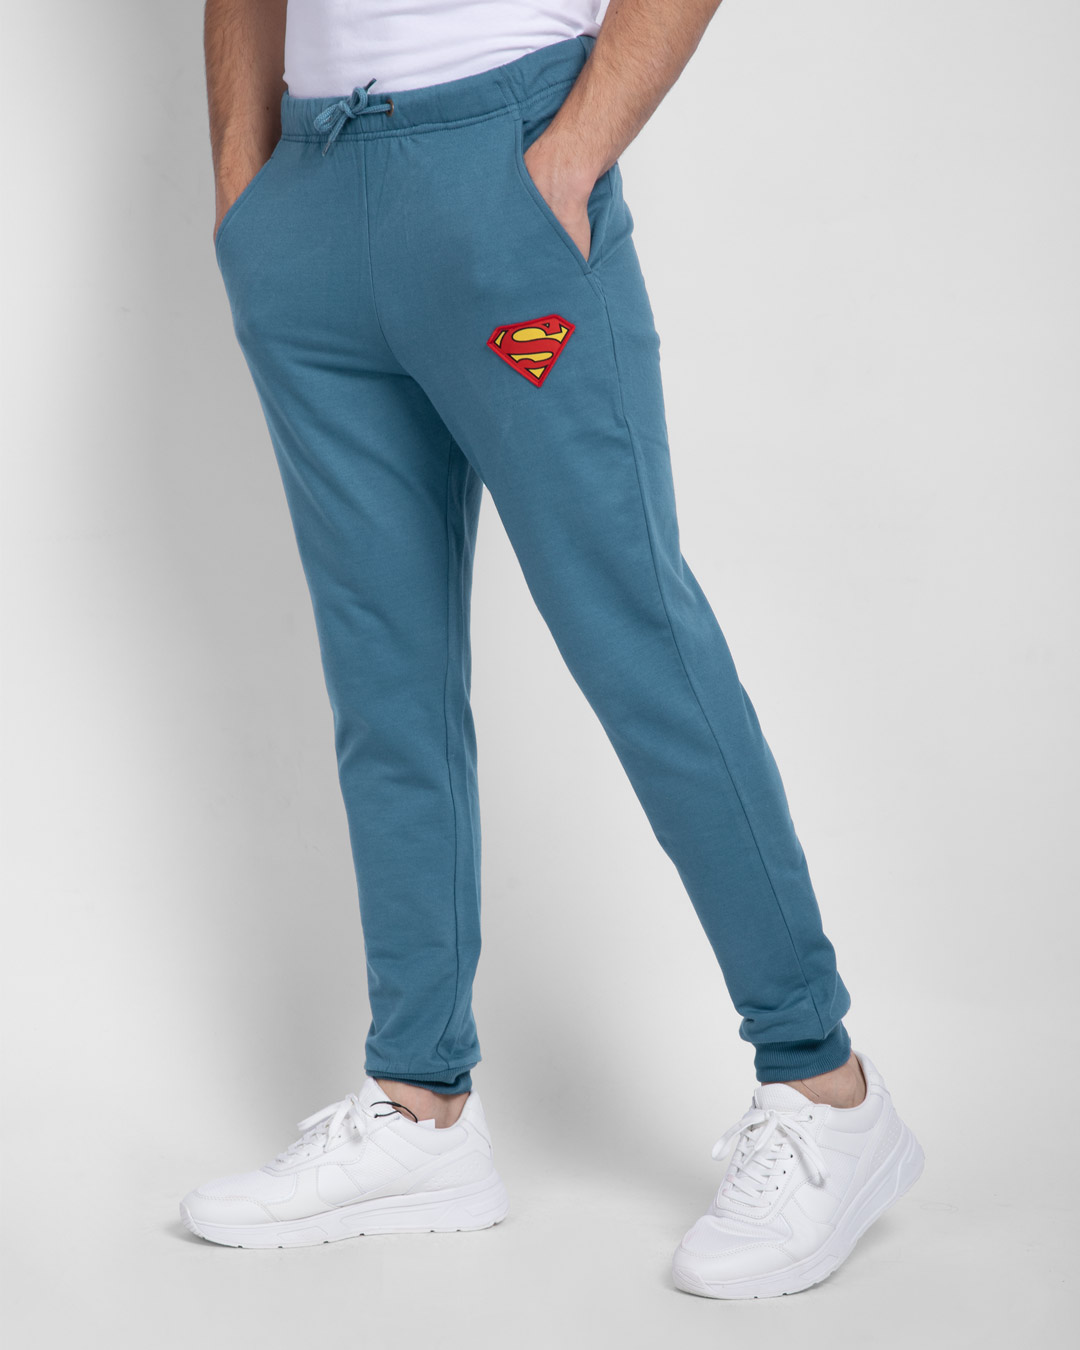 Superman Fleece Pajama Pants for Women  Mercari